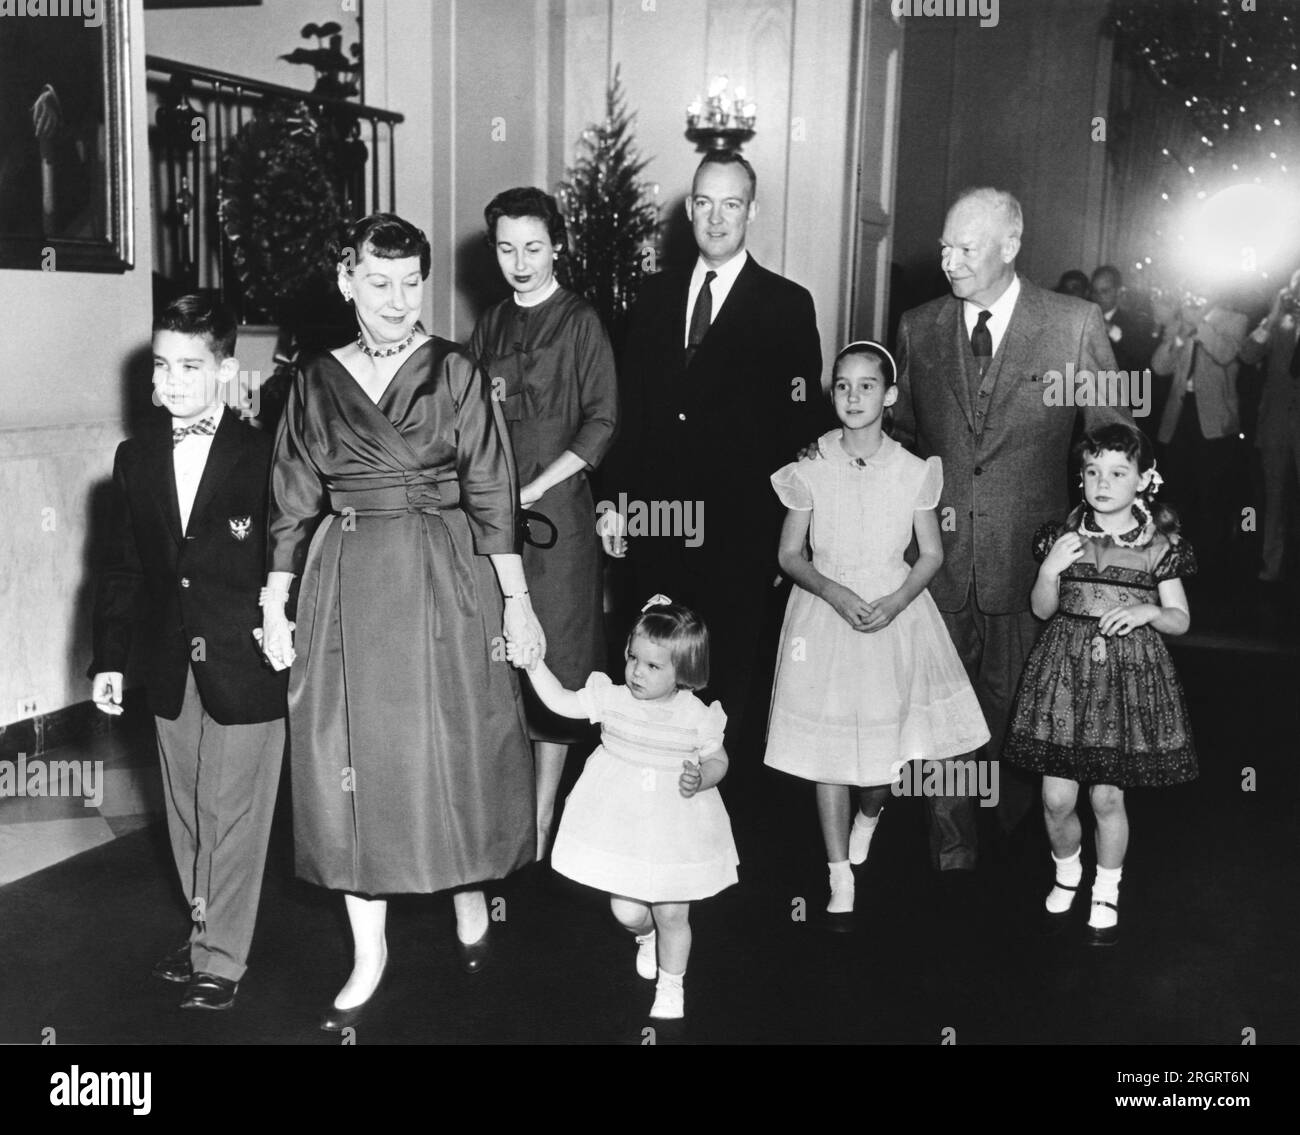 Washington, D.C.:  December, 1957 The Eisenhower family celebrating Christmas at the White House. Stock Photo